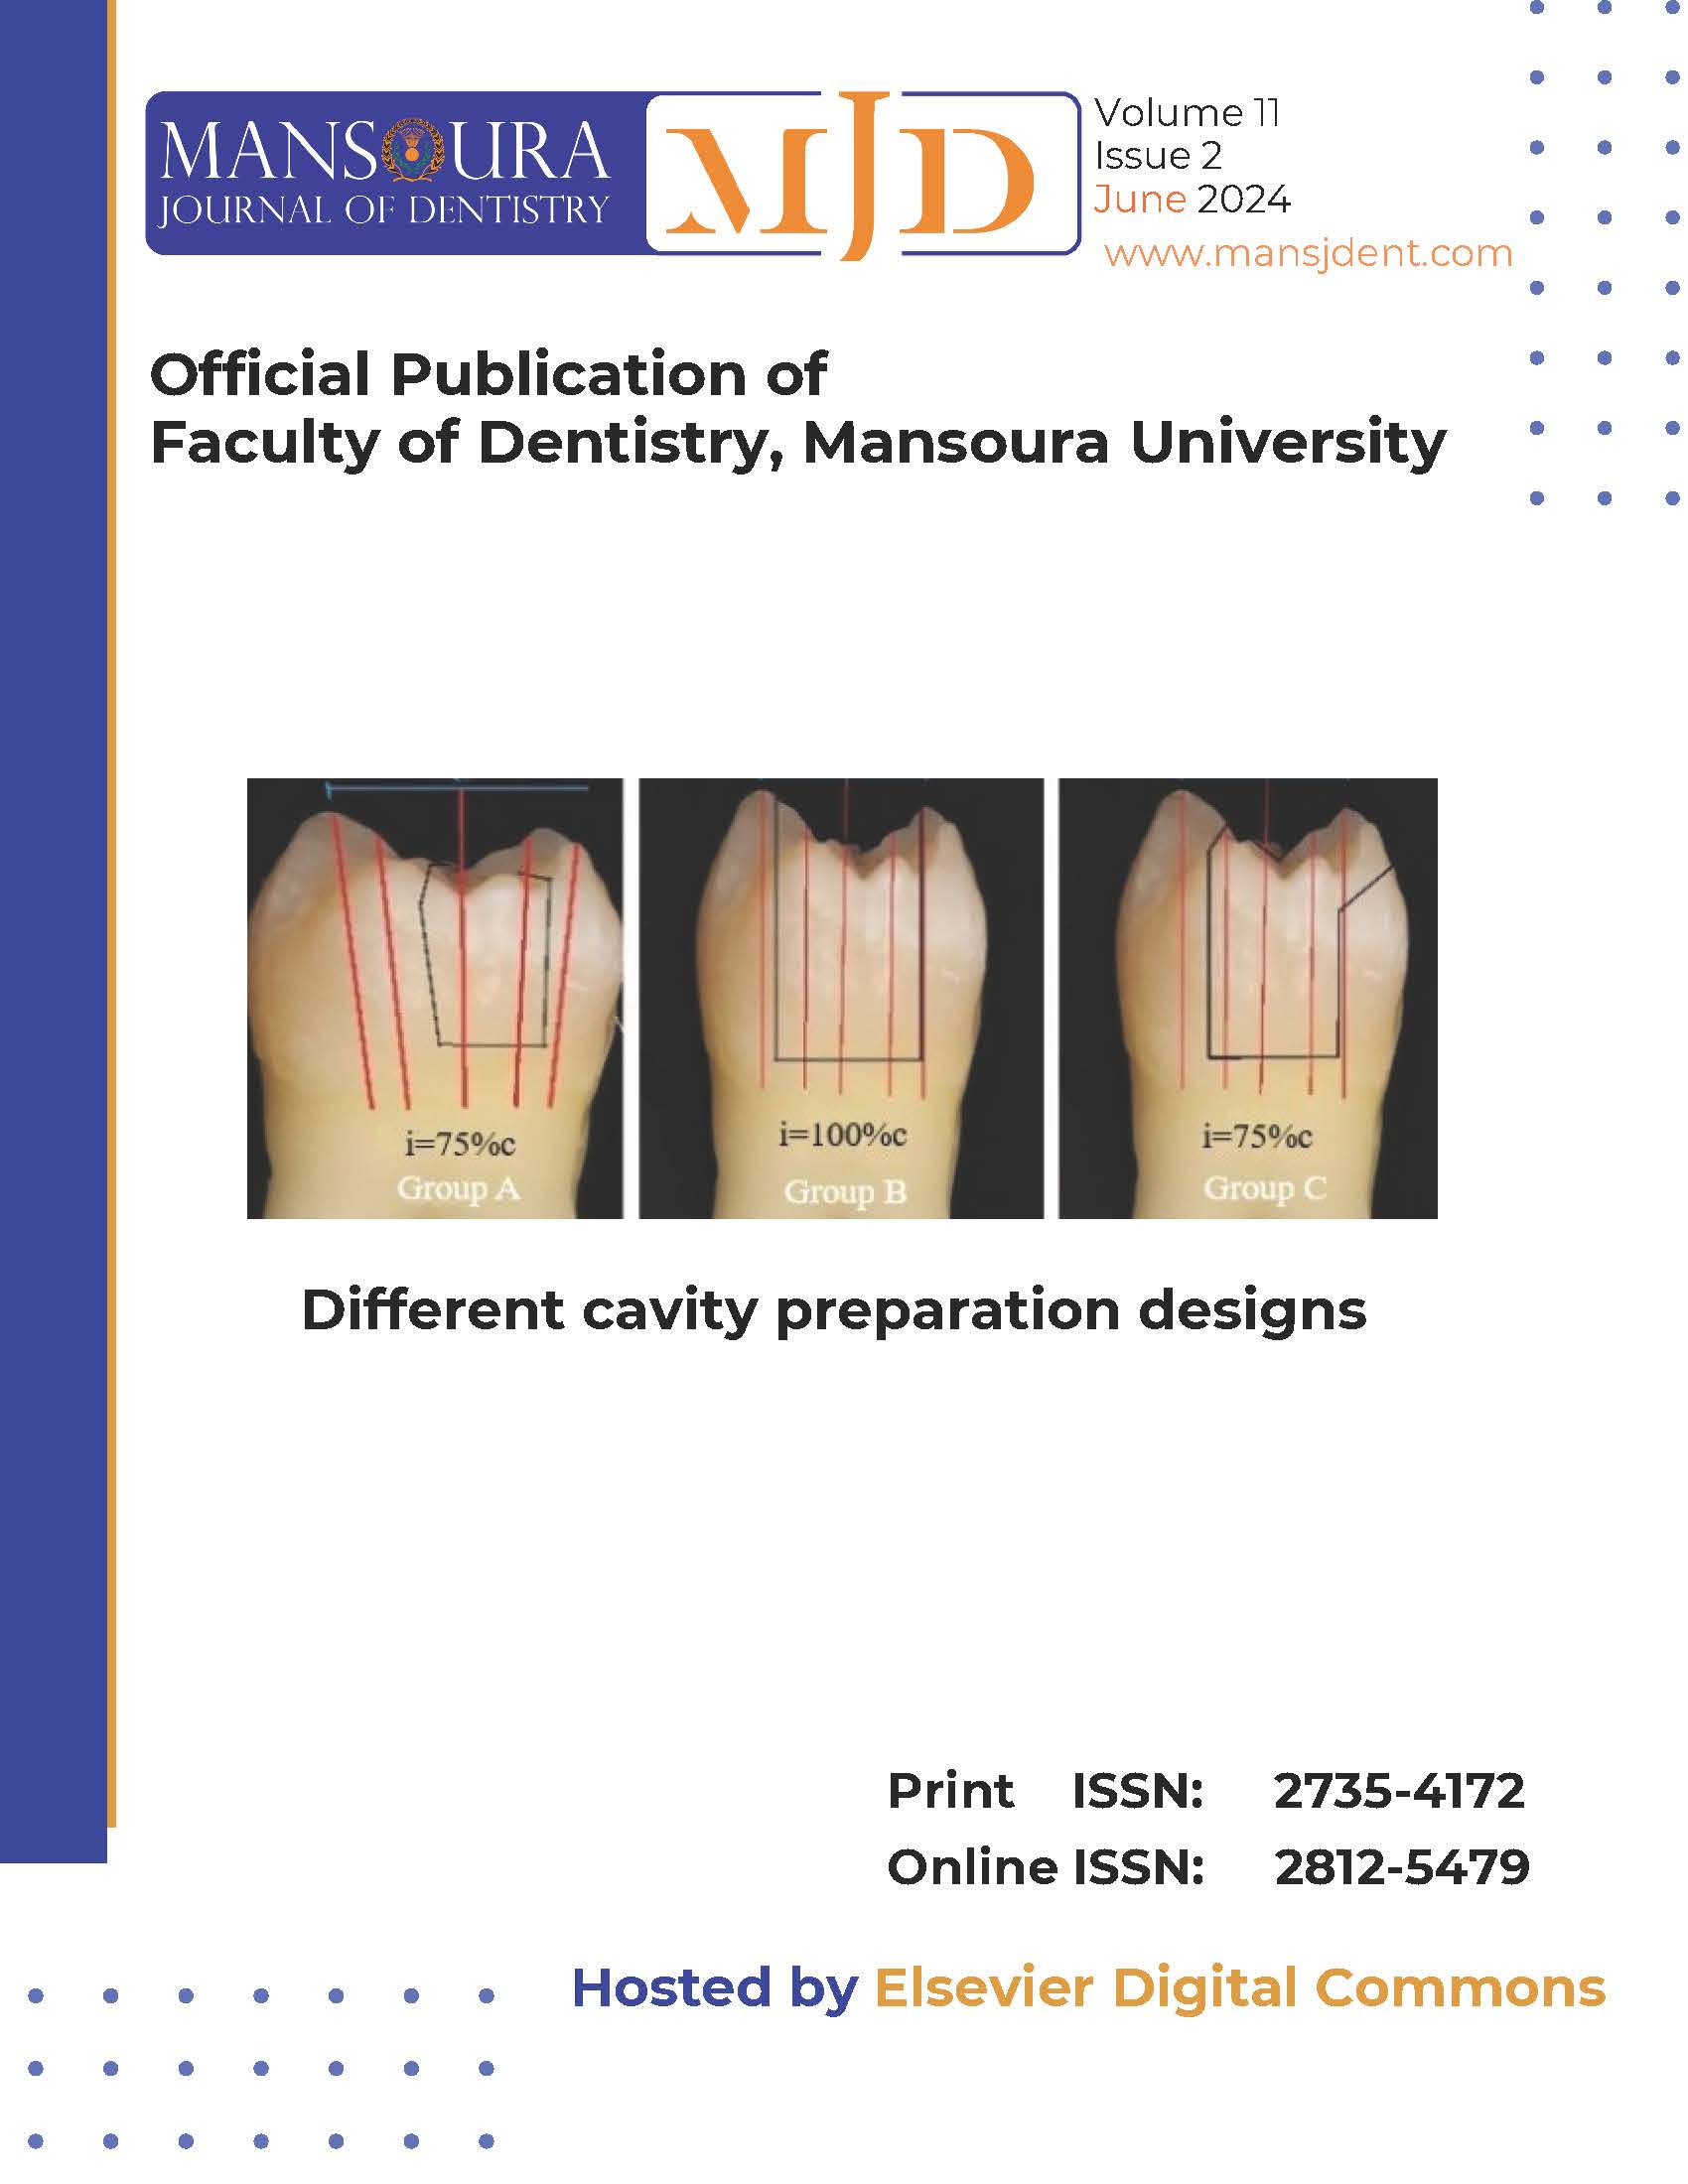 Mansoura Journal of Dentistry